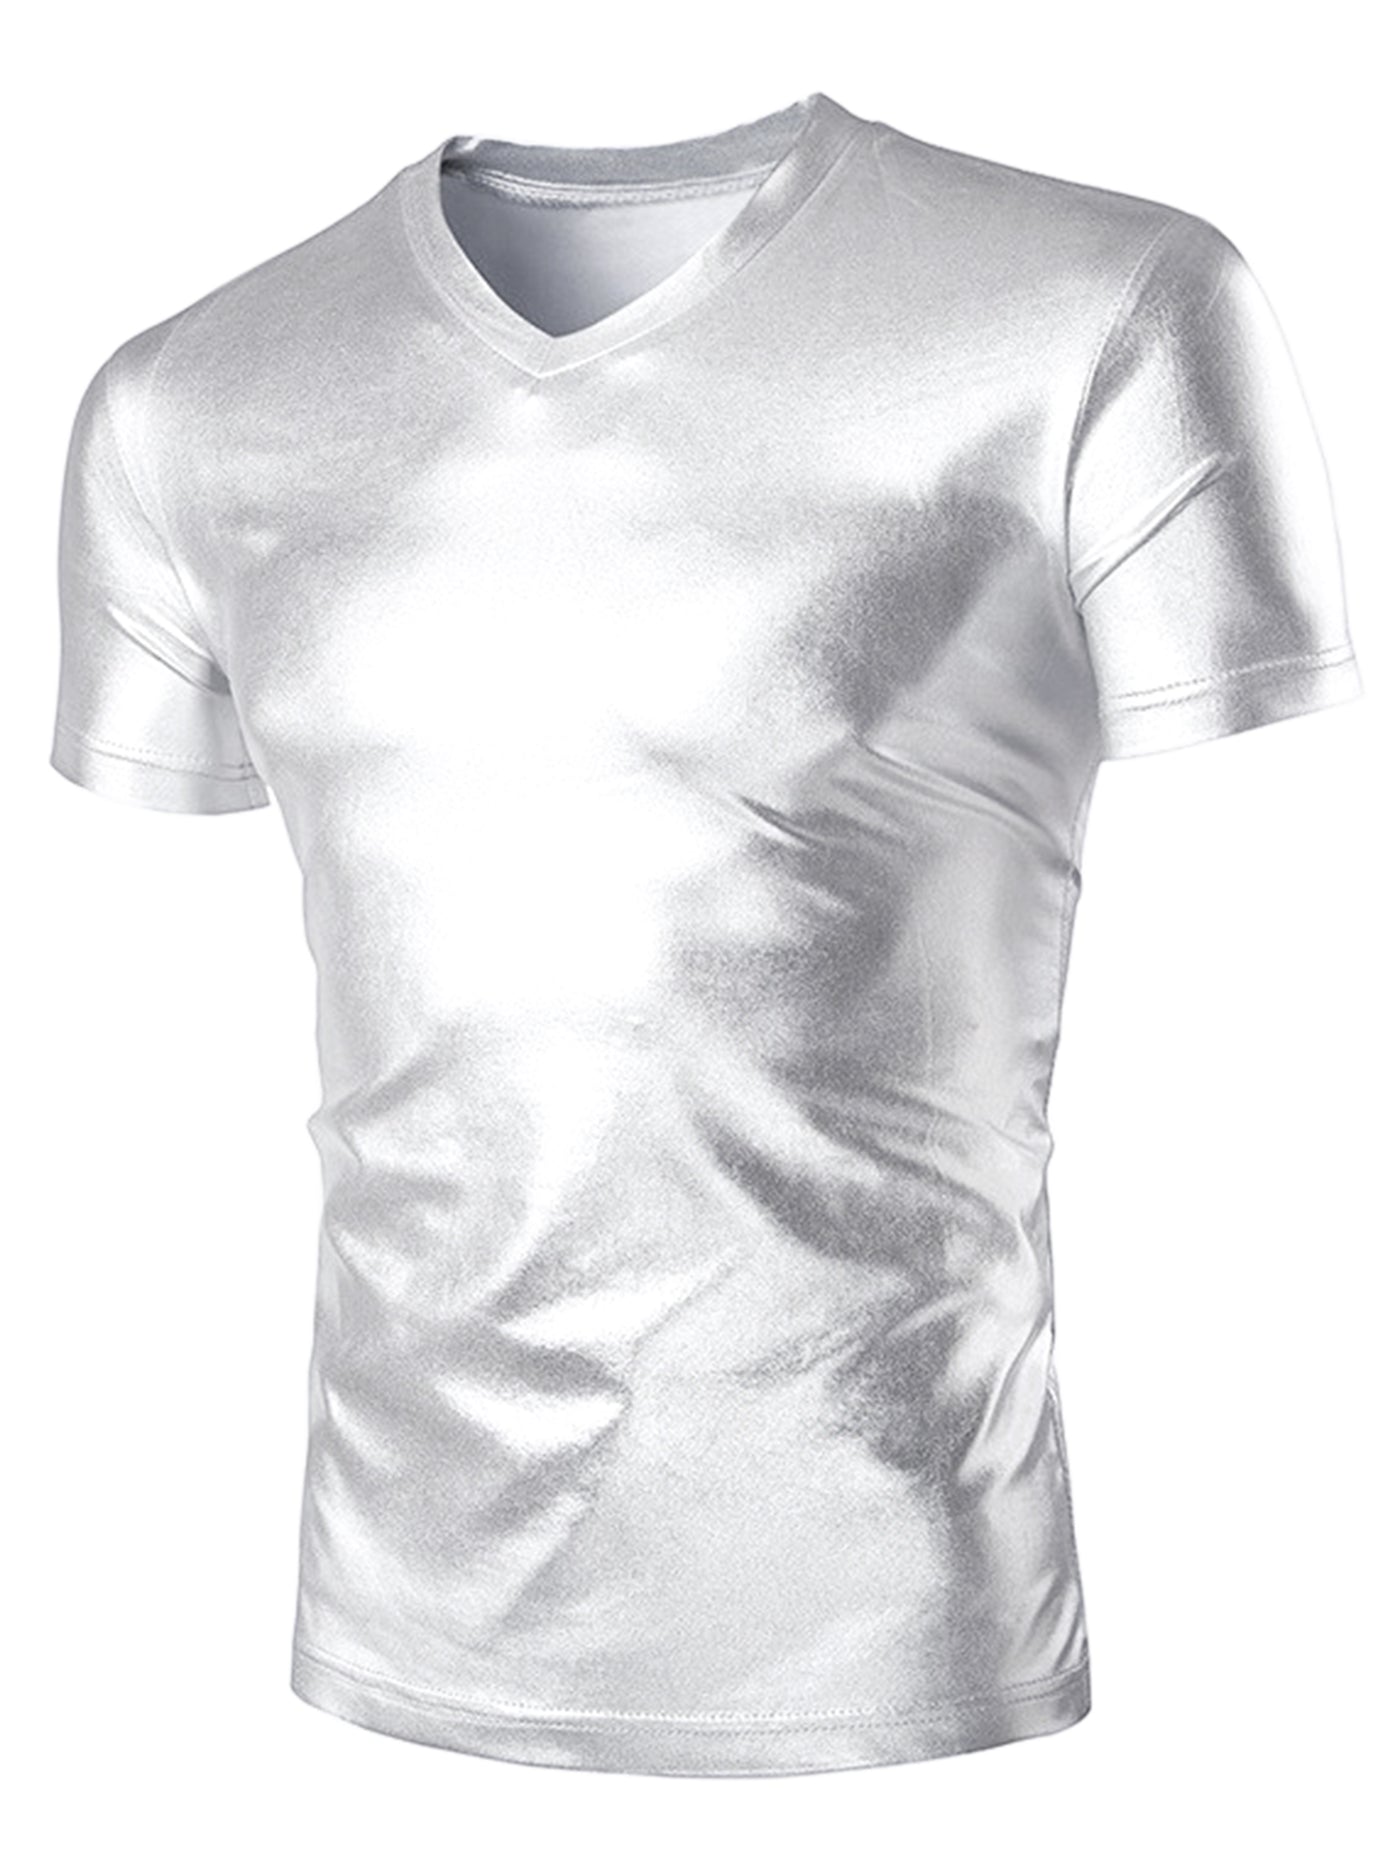 Bublédon Metallic Shiny V Neck Short Sleeve Party T-Shirt